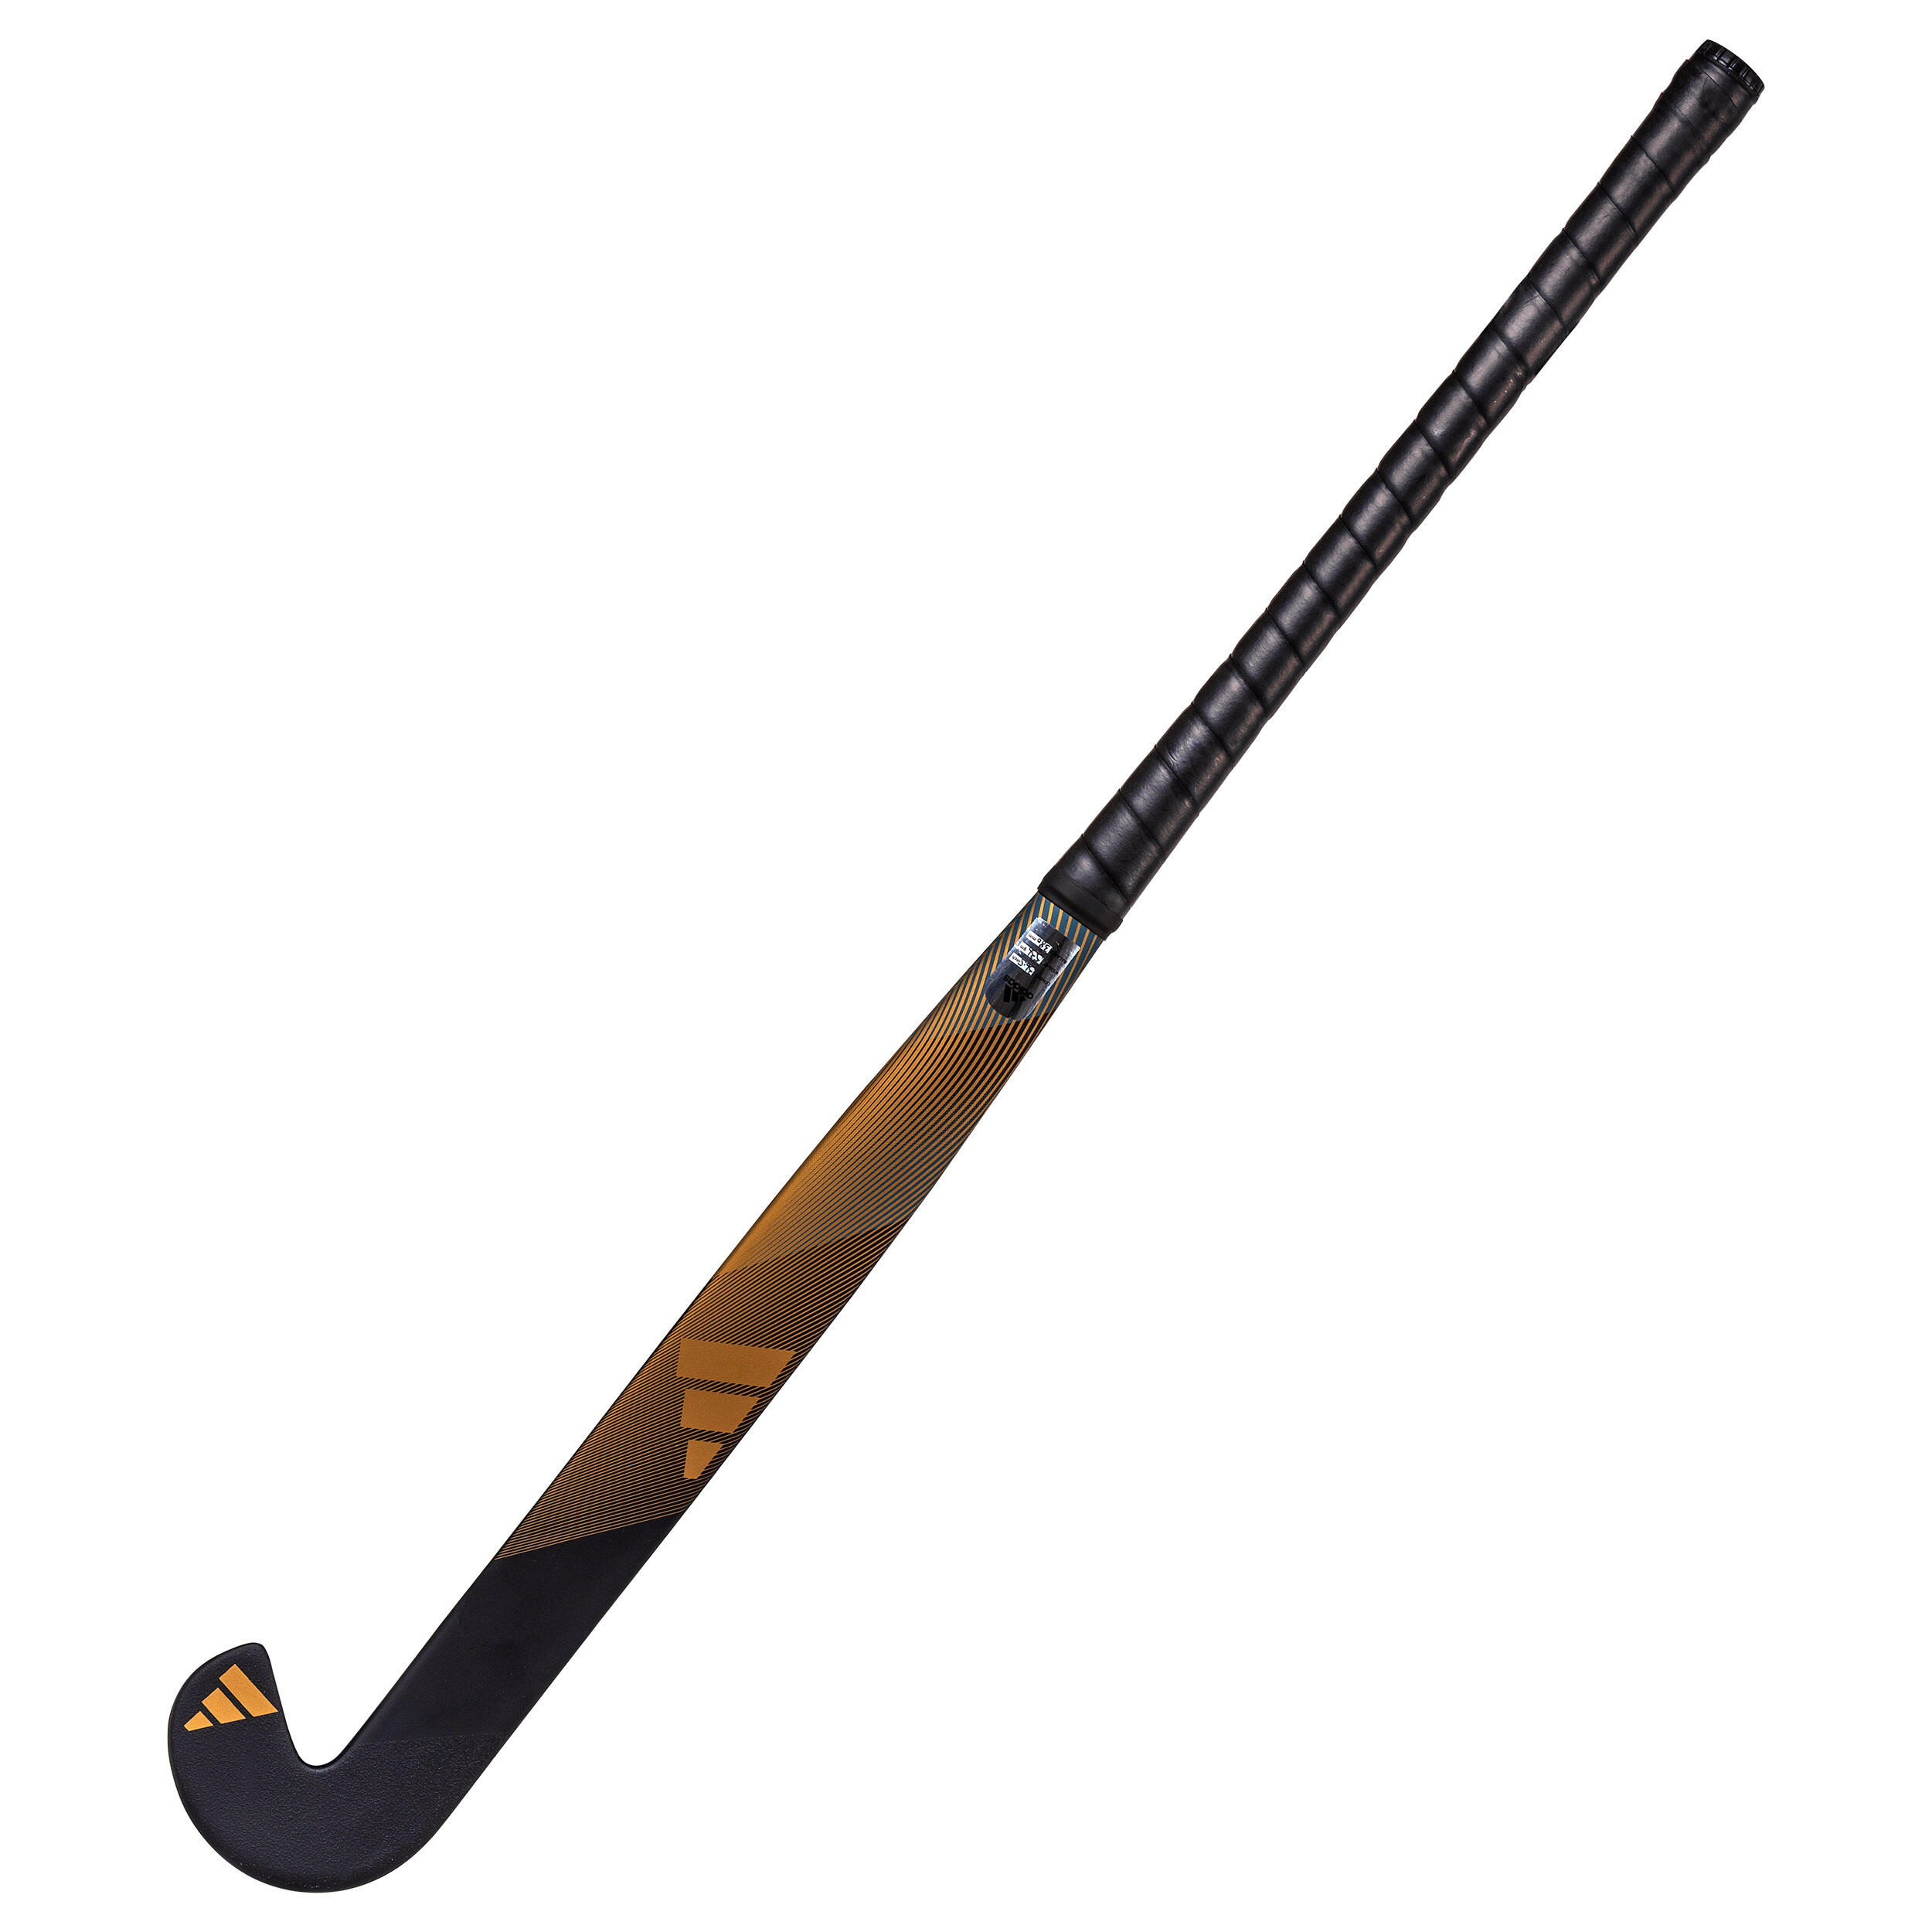 Adult Intermediate 30% Carbon Low Bow Field Hockey Stick Ruzo.6 - Gold/Black 5/12